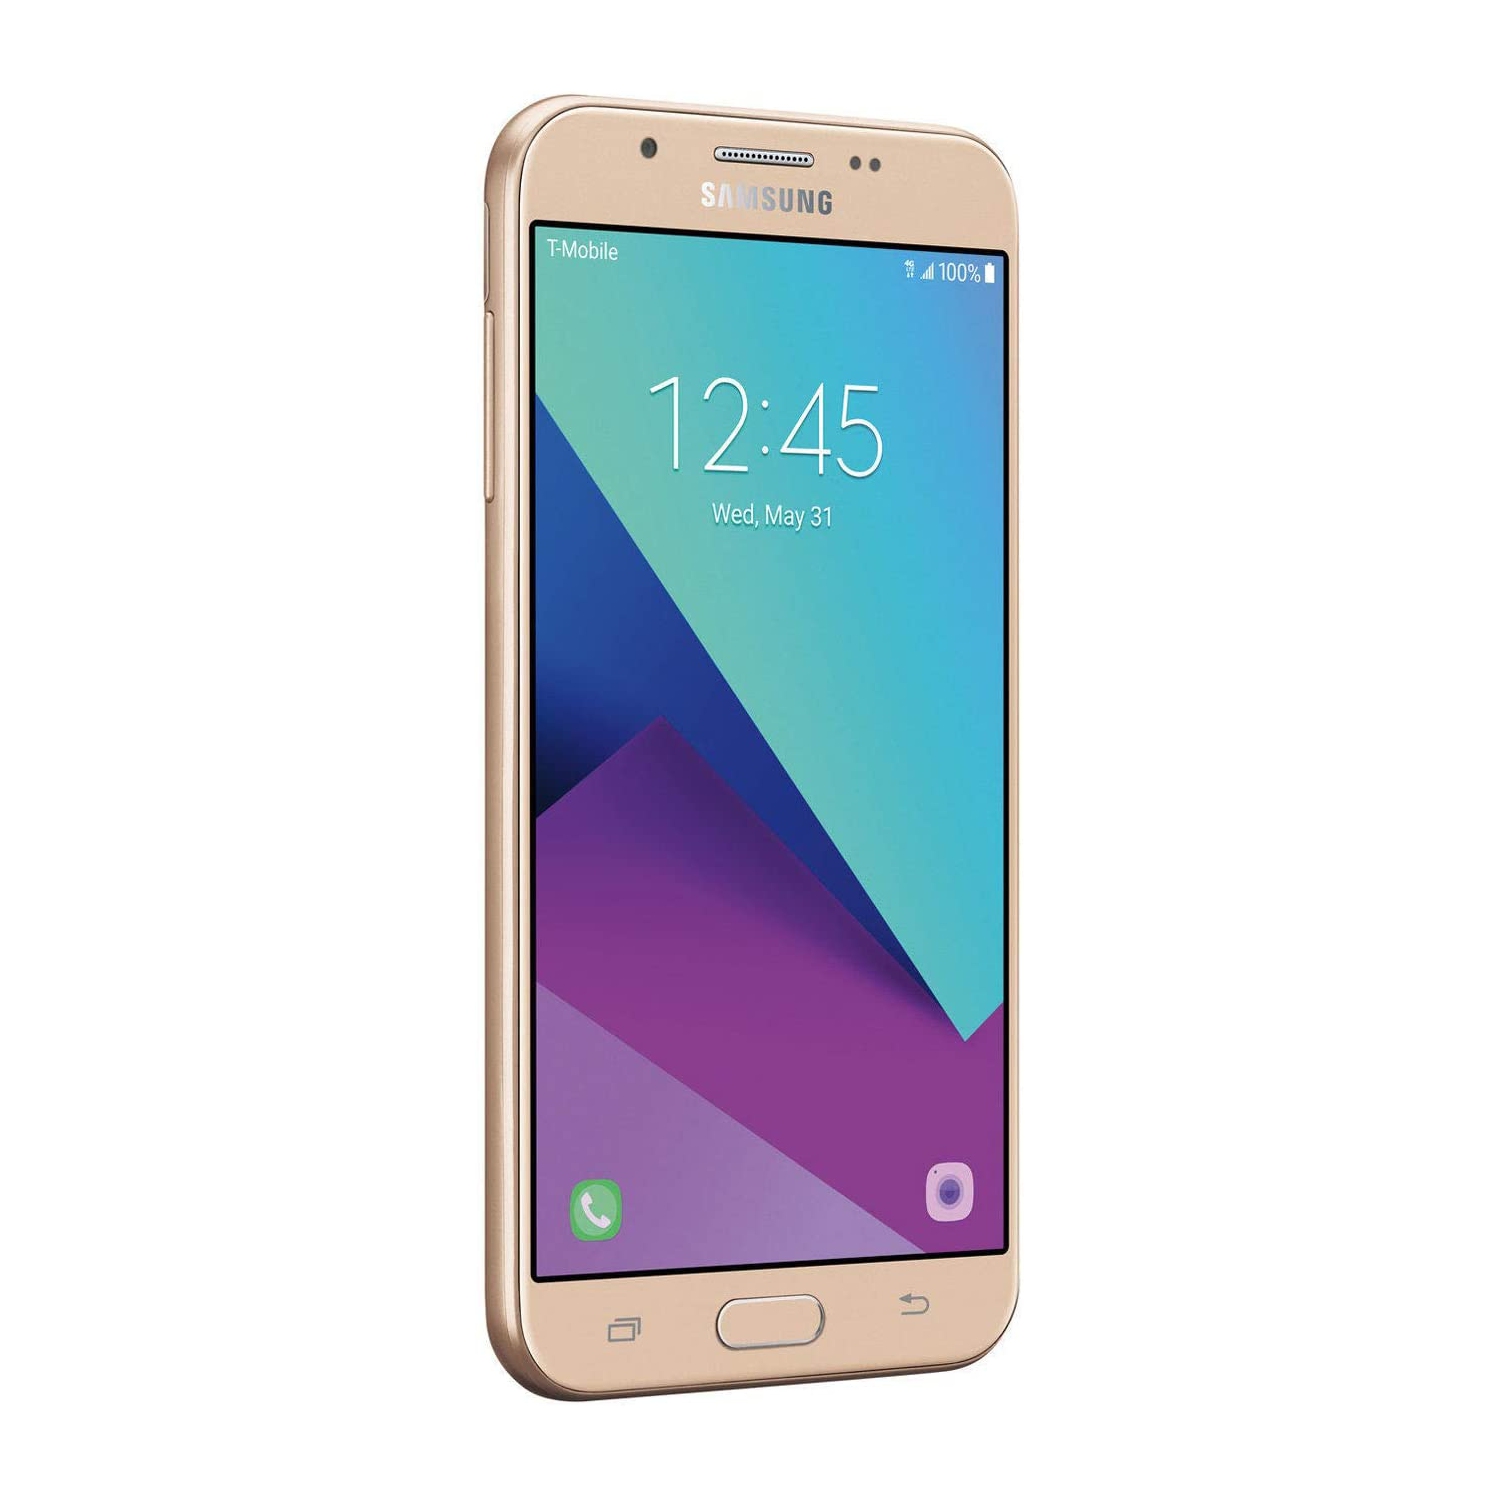 Samsung Galaxy J7 Prime - Black - 16GB - Smartphone Factory Unlocked